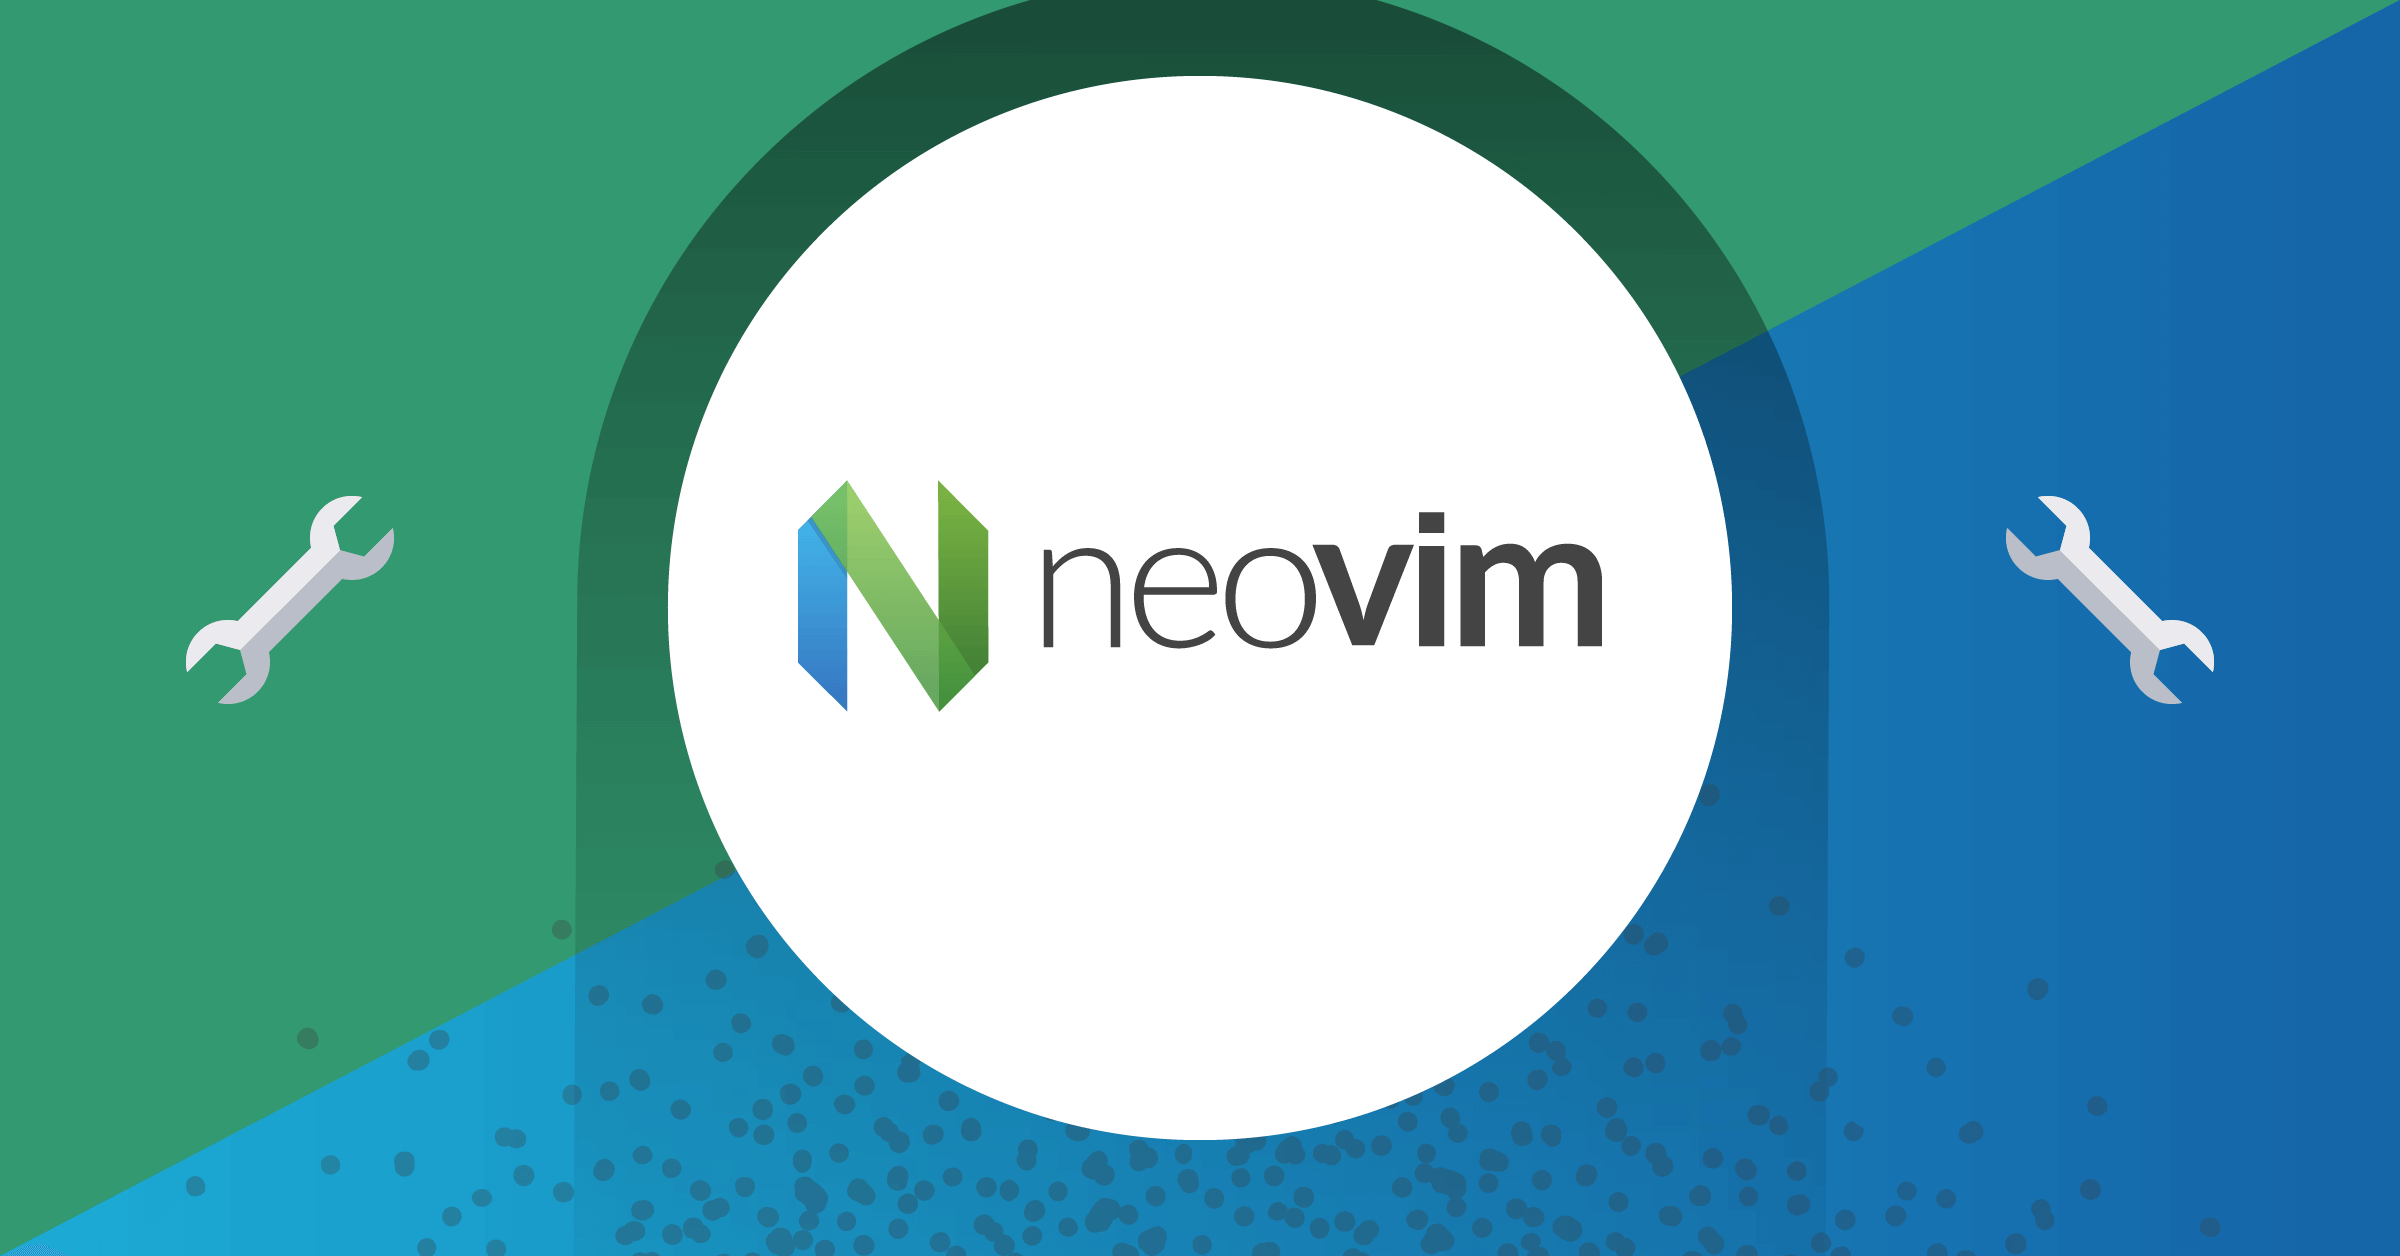 Why should you as a developer use NeoVim